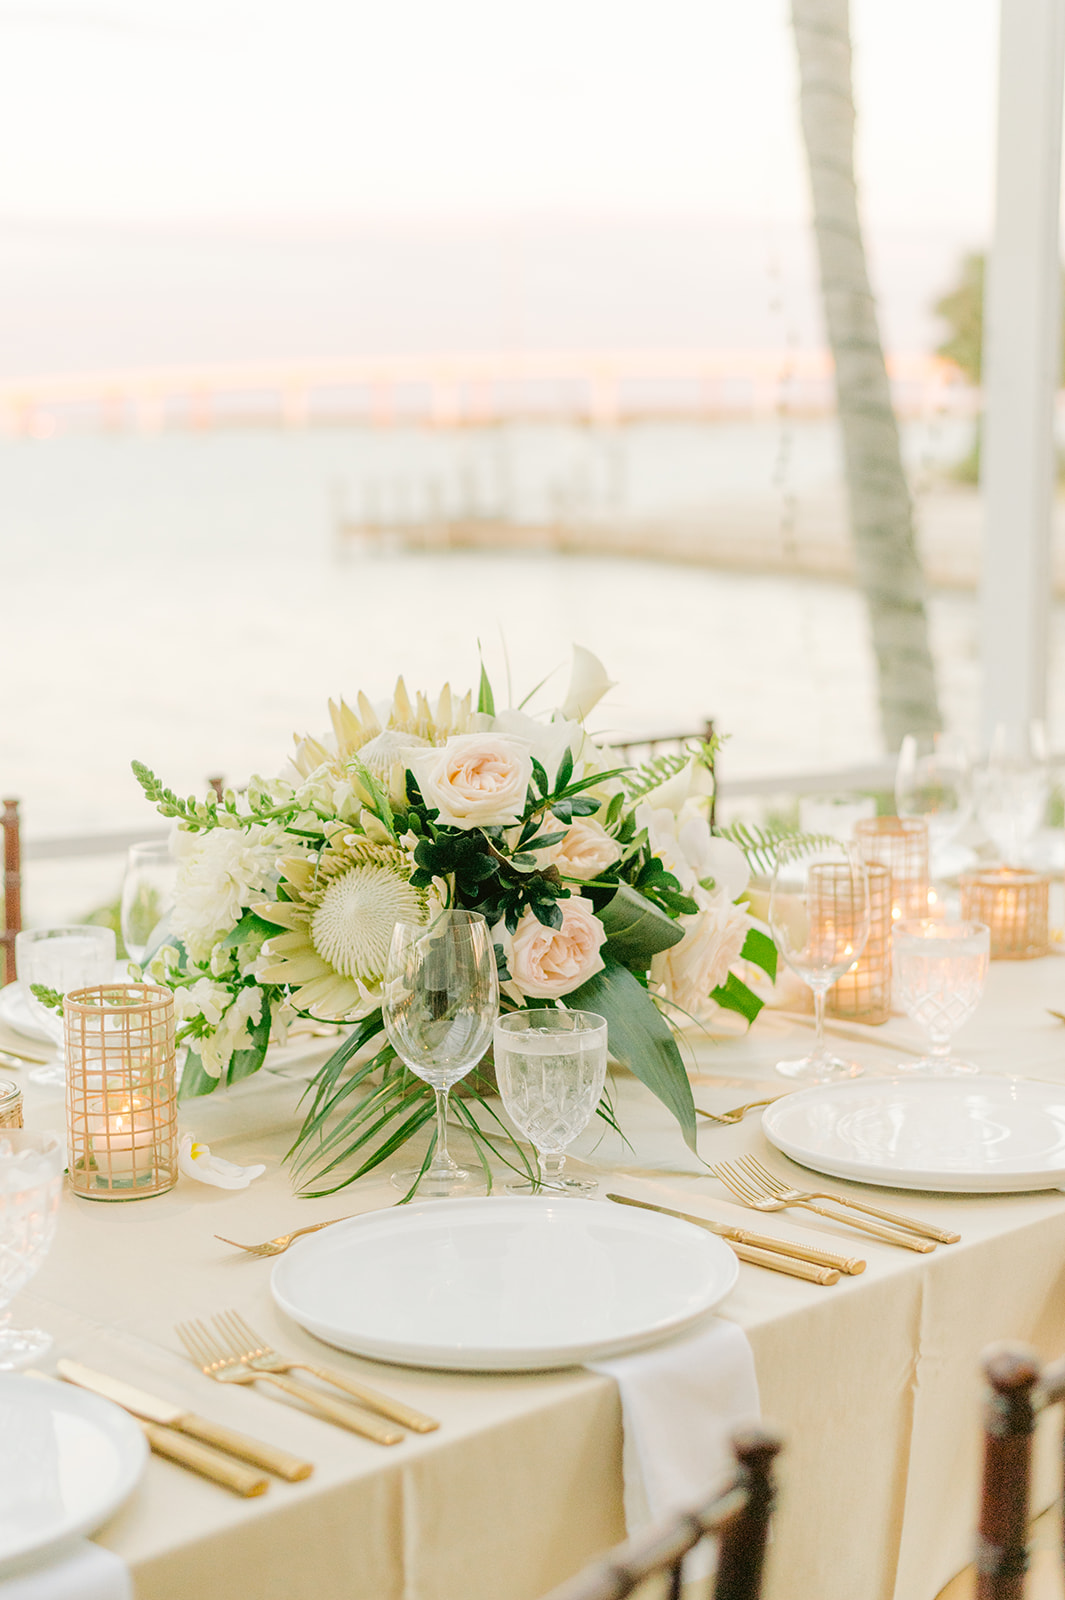 Gulfshore Life Magazine Feature - Stunning Fine Art Wedding Photography in Marco Island
